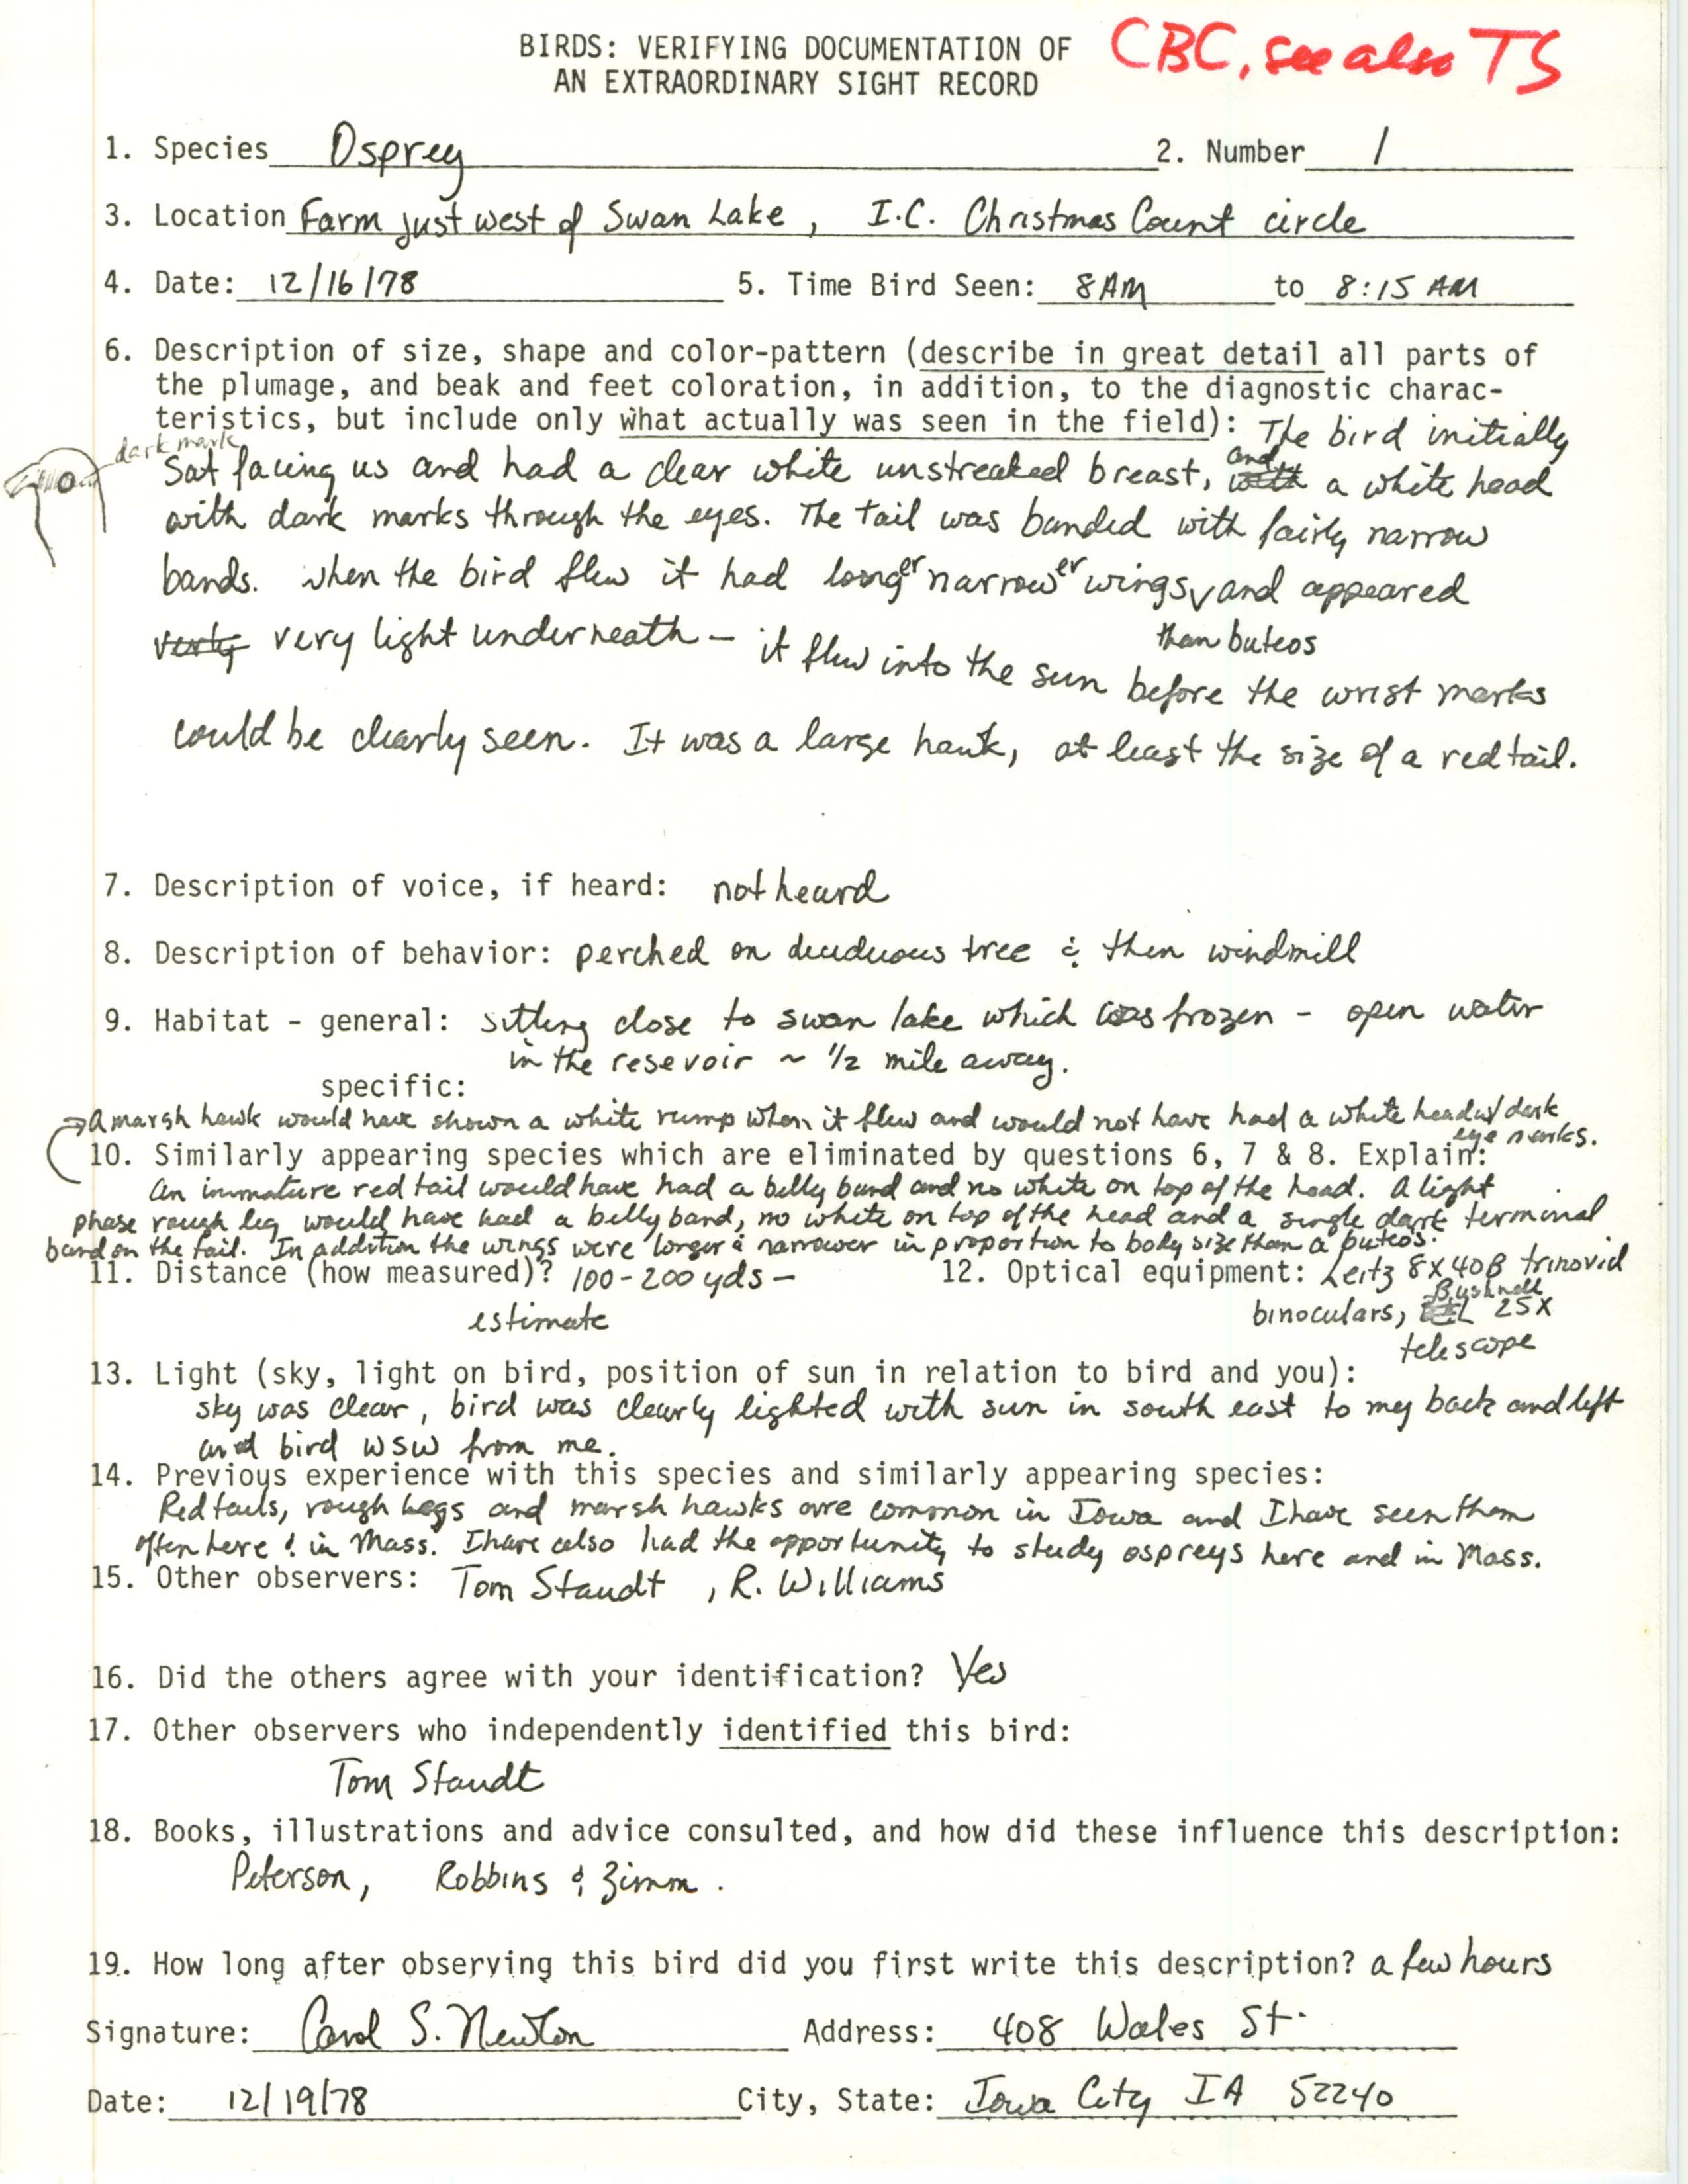 Rare bird documentation form for Osprey at Swan Lake, 1978